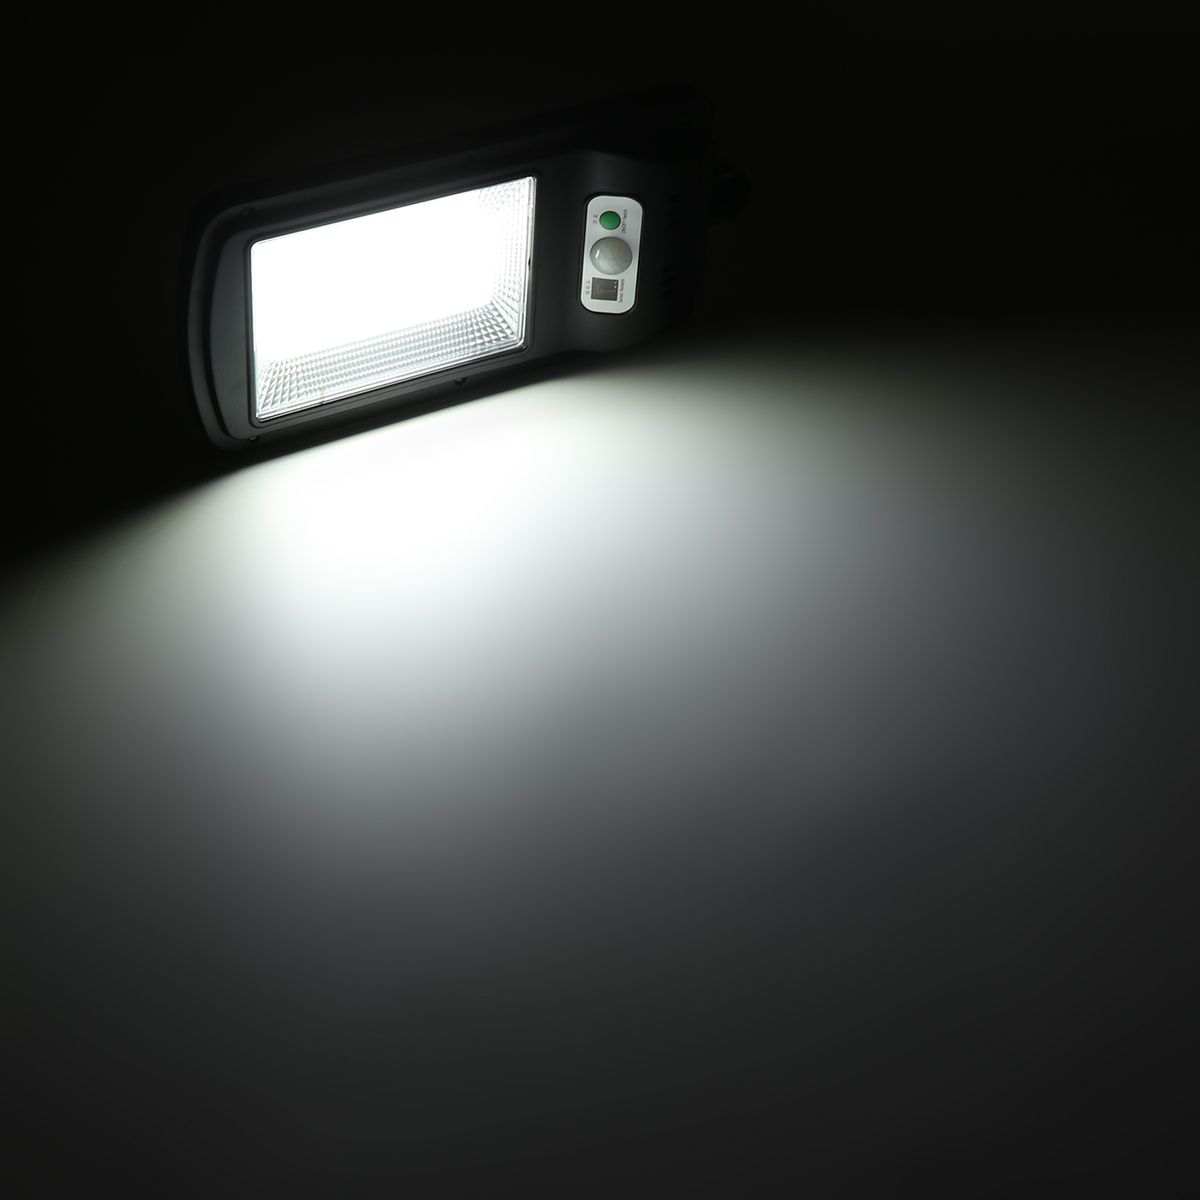 100120128-LED-Solar-Powered-Motion-Sensor-Wall-Light-IP65-Rotatable-Street-LampRemote-1735757